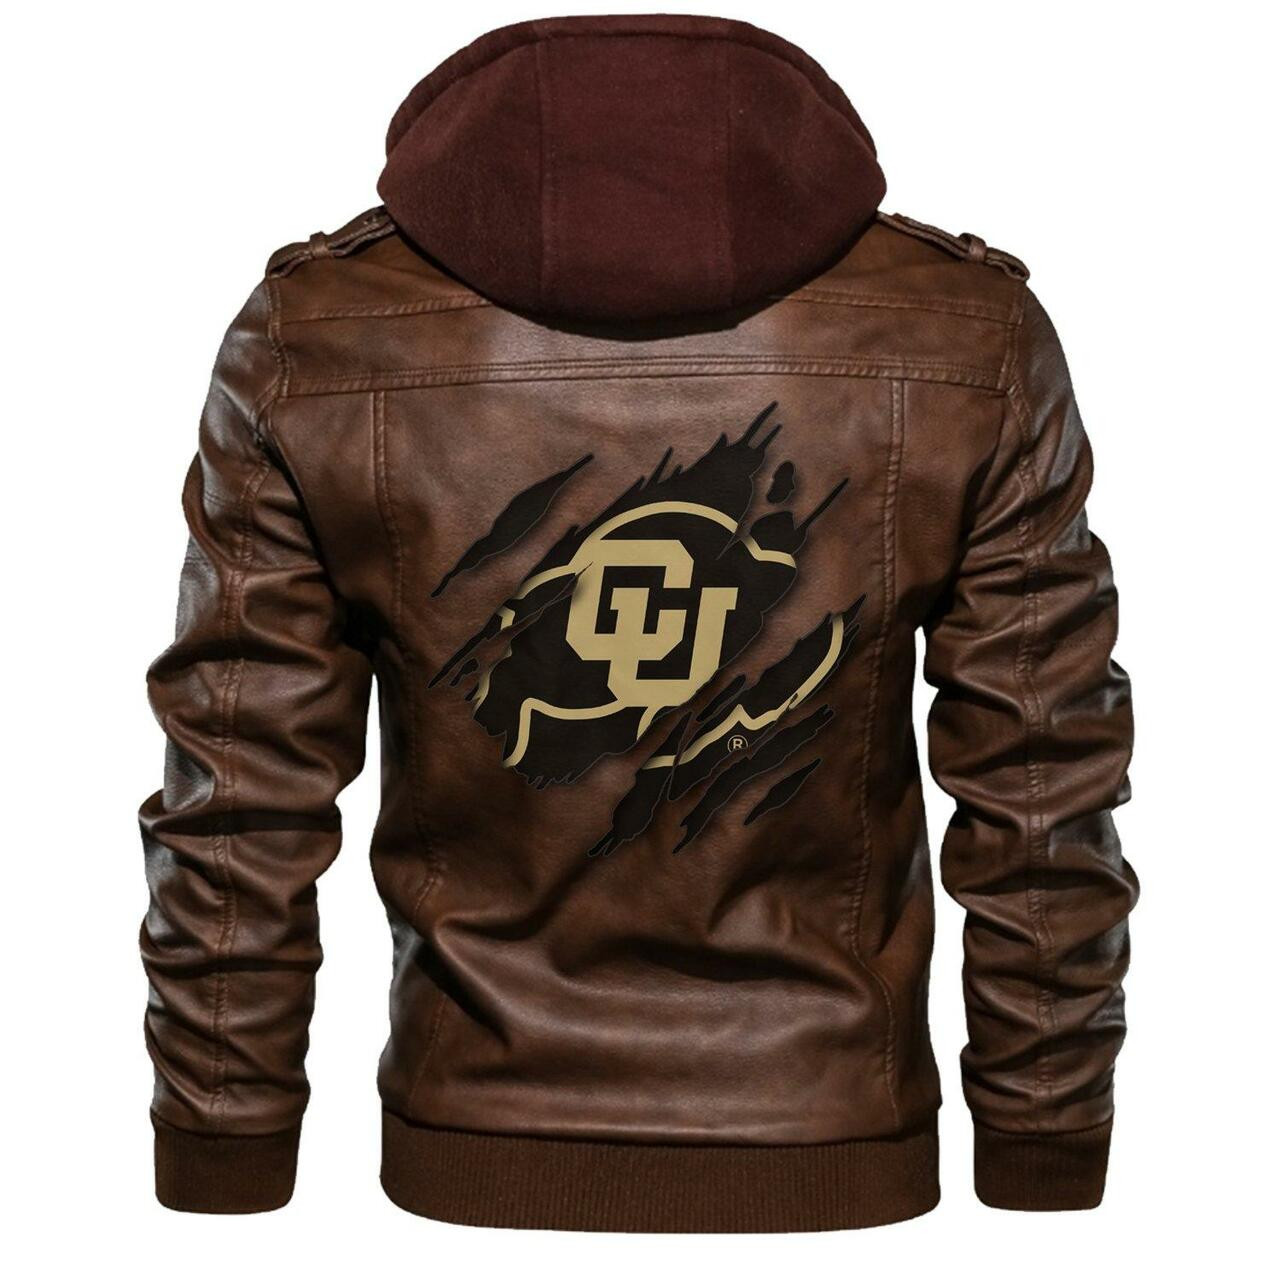 Top leather jacket Sells Best on Techcomshop 21